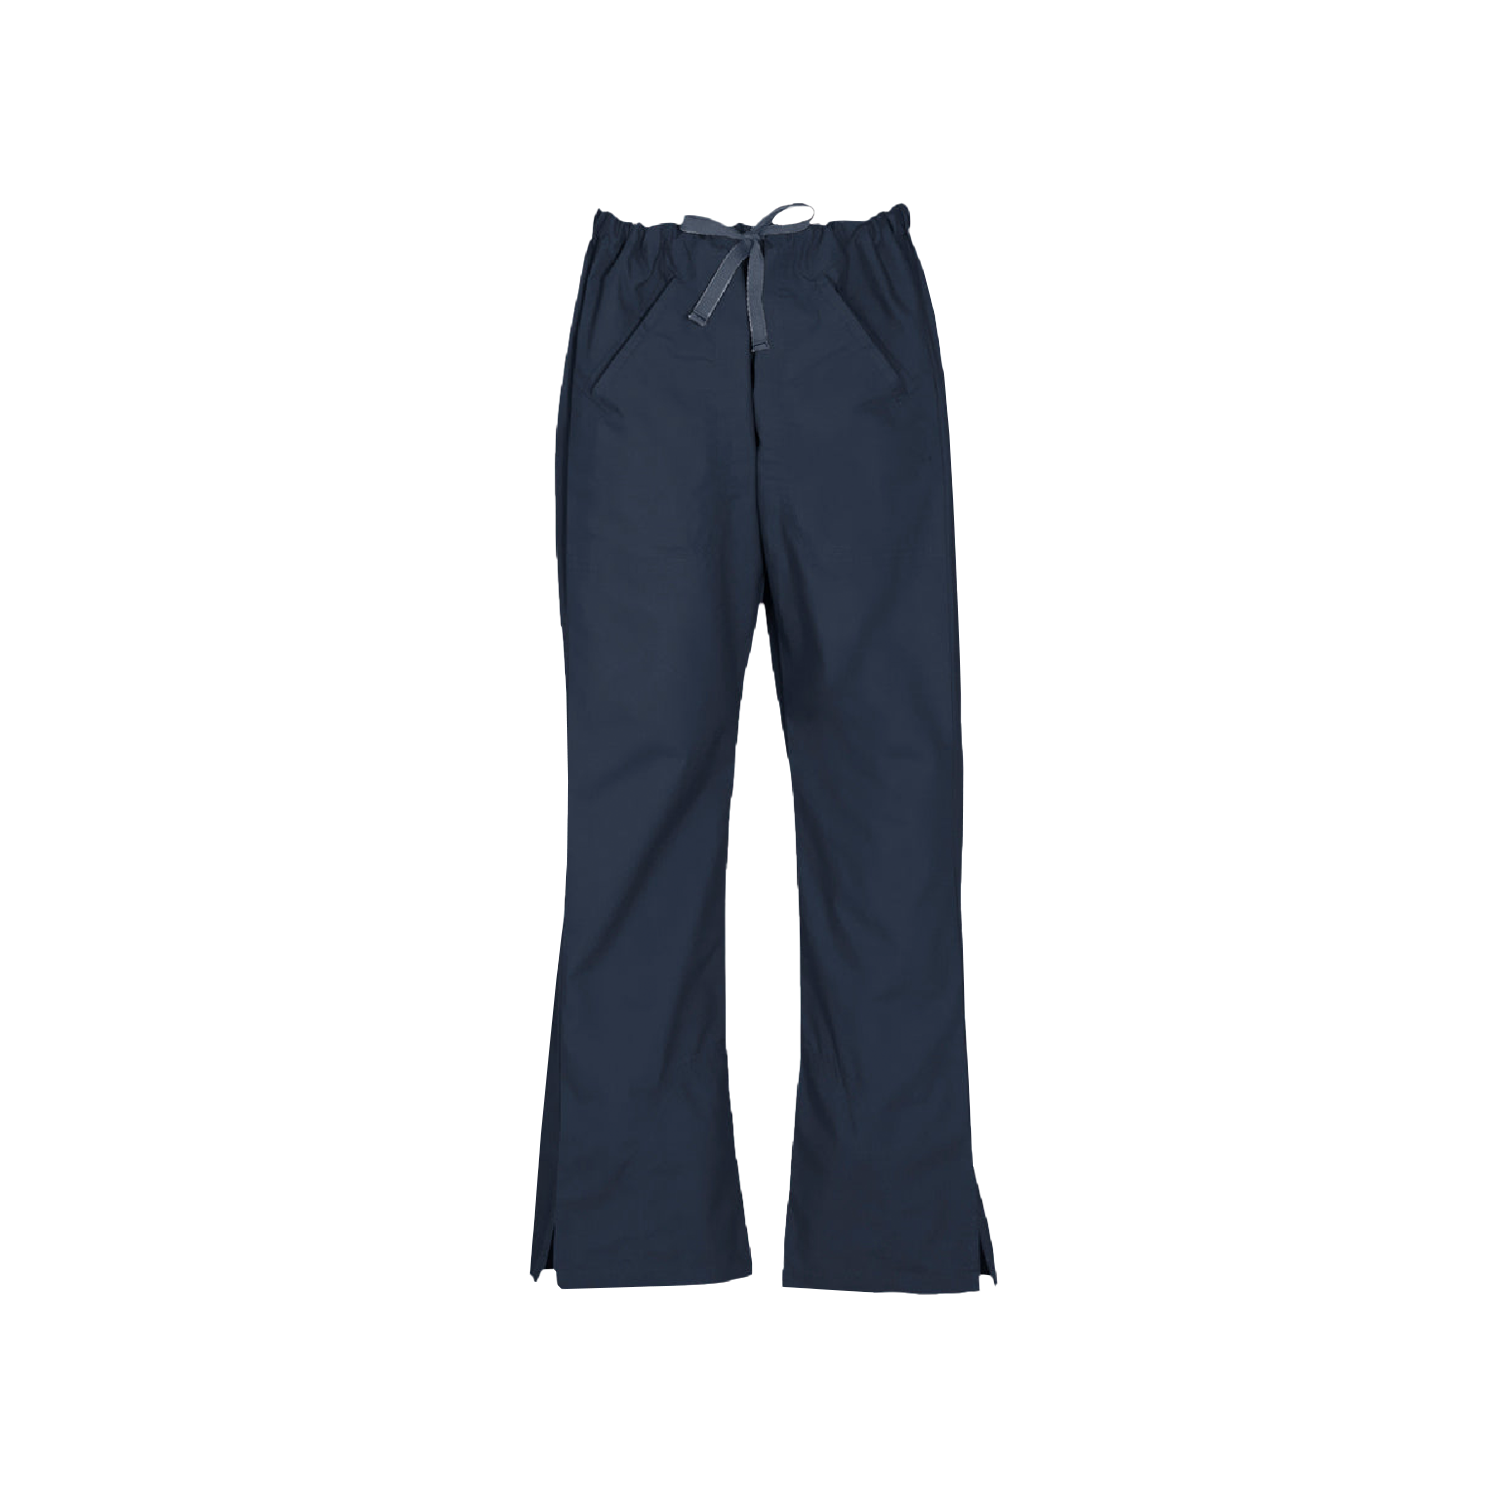 Biz Collection Women's Classic Scrubs Pants - Navy - Totally Workwear